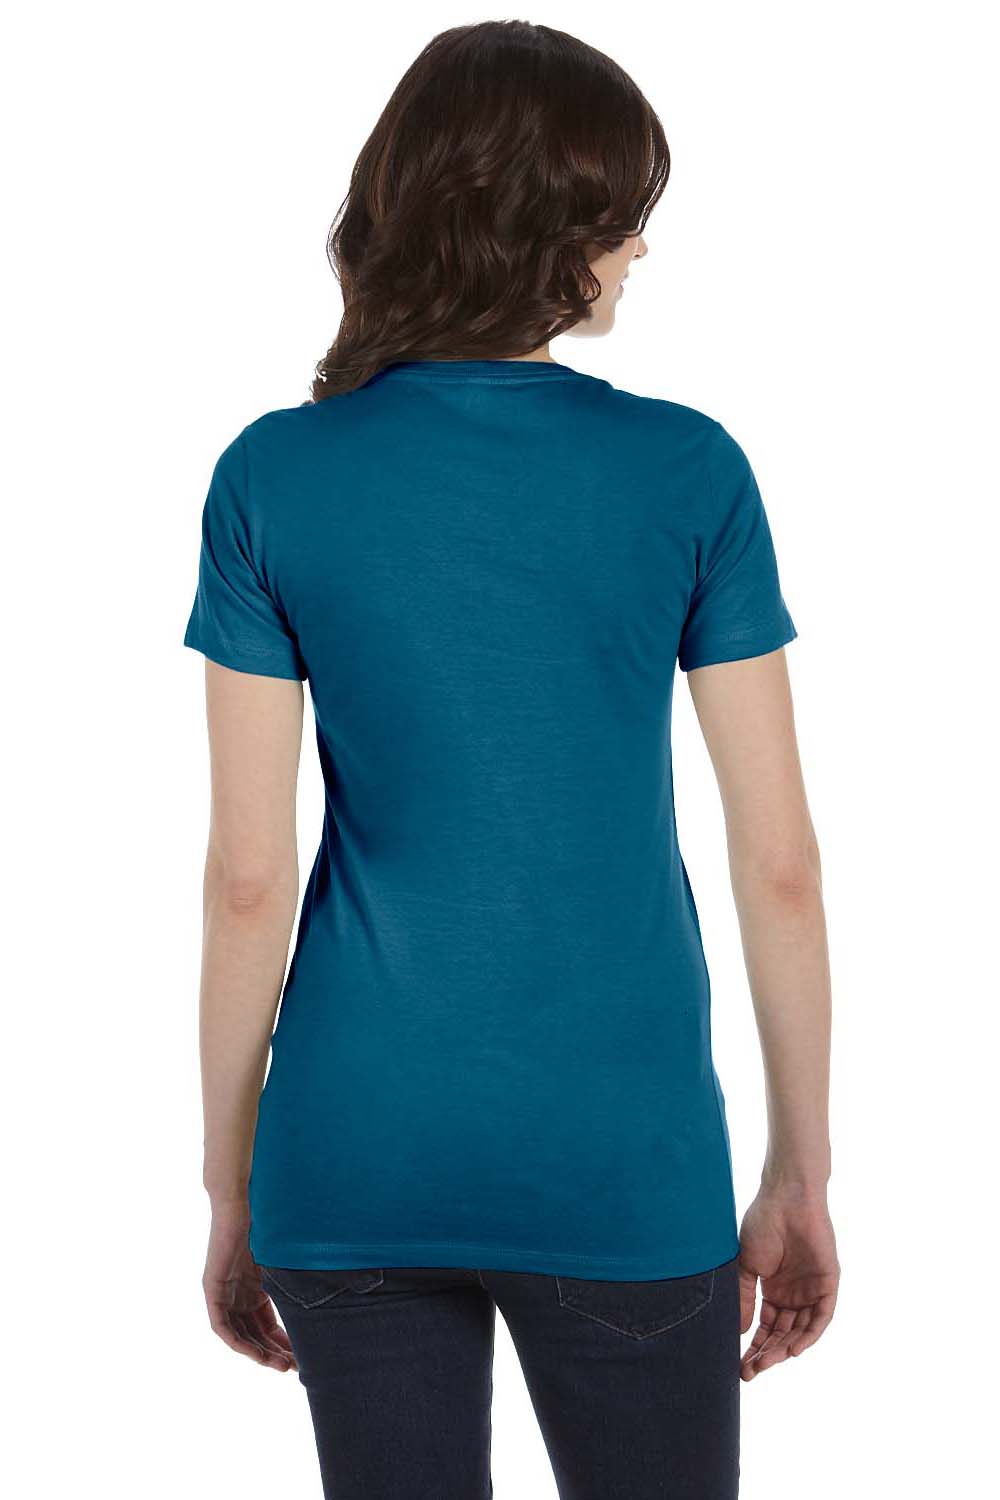 Bella + Canvas 6004 Womens The Favorite Short Sleeve Crewneck T-Shirt Deep Teal Blue Back